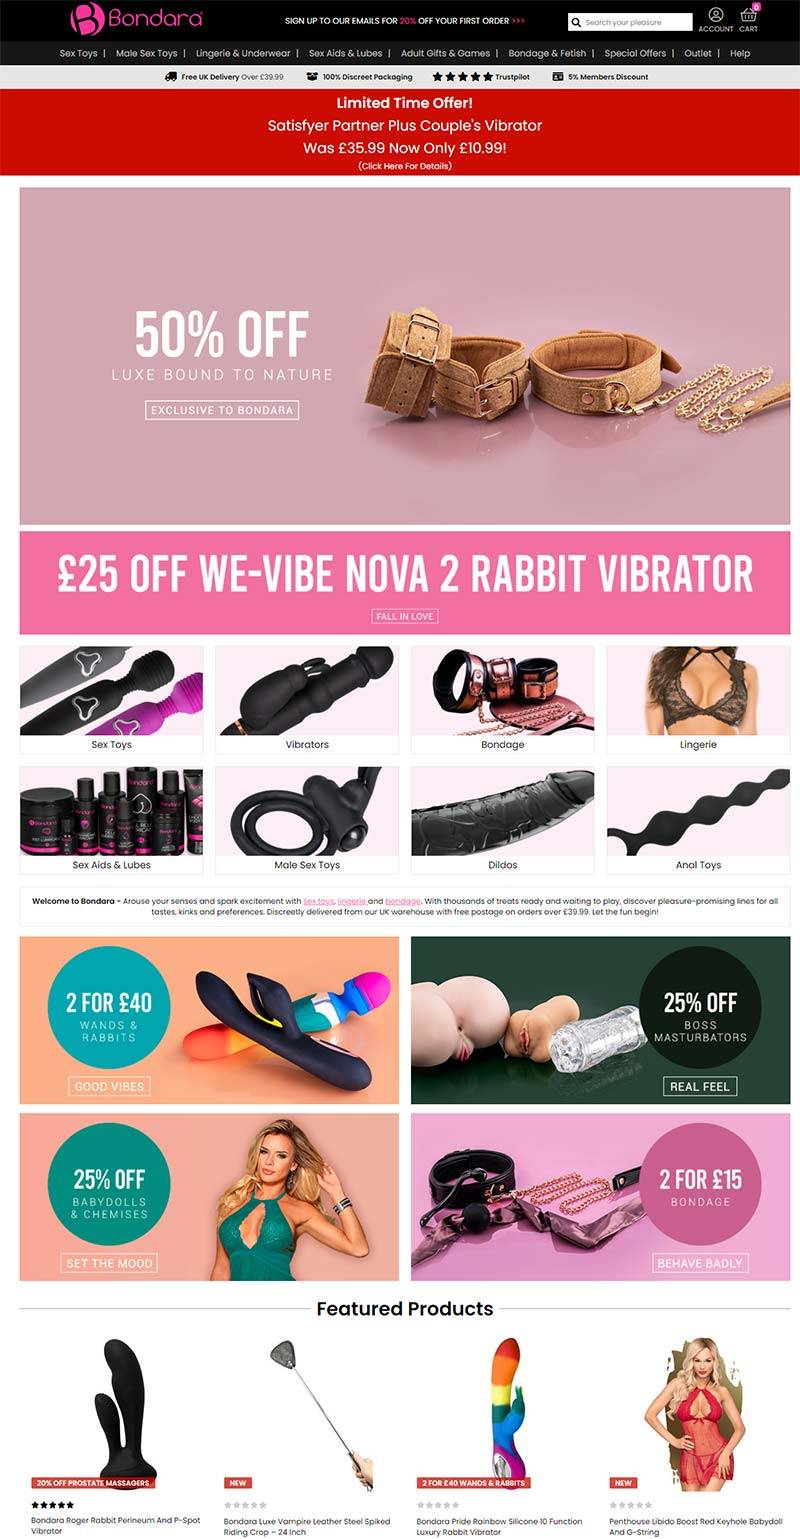 Bondara 英国性爱玩具品牌购物网站